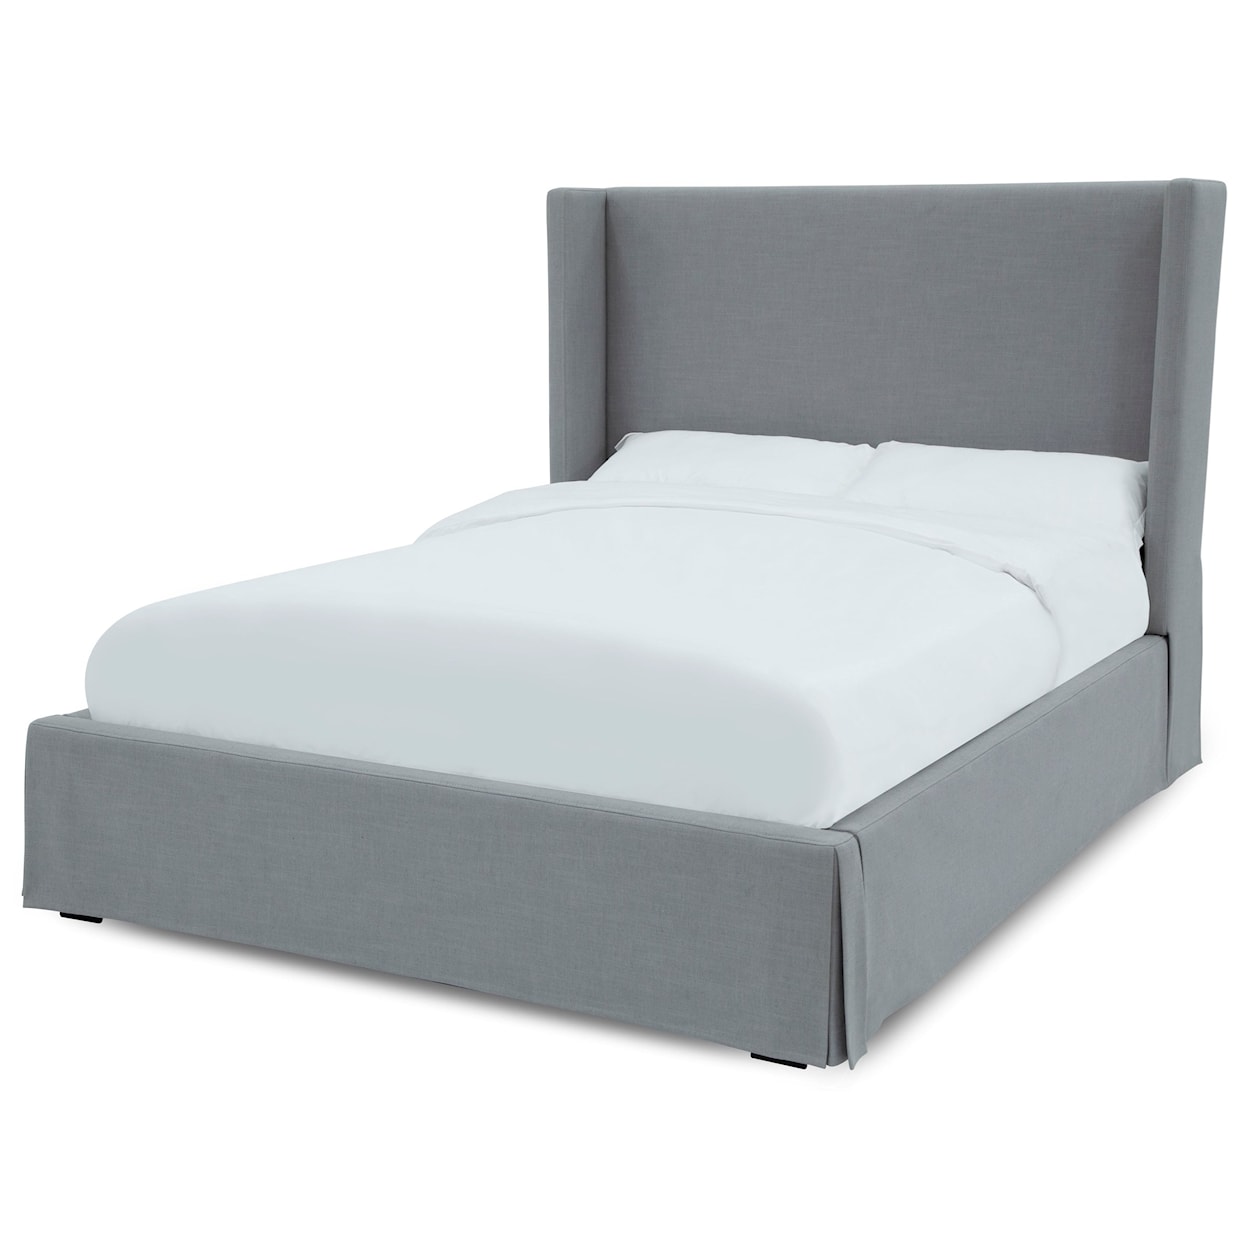 Modus International Juliette Cresta Cal King Upholstered Skirted Bed